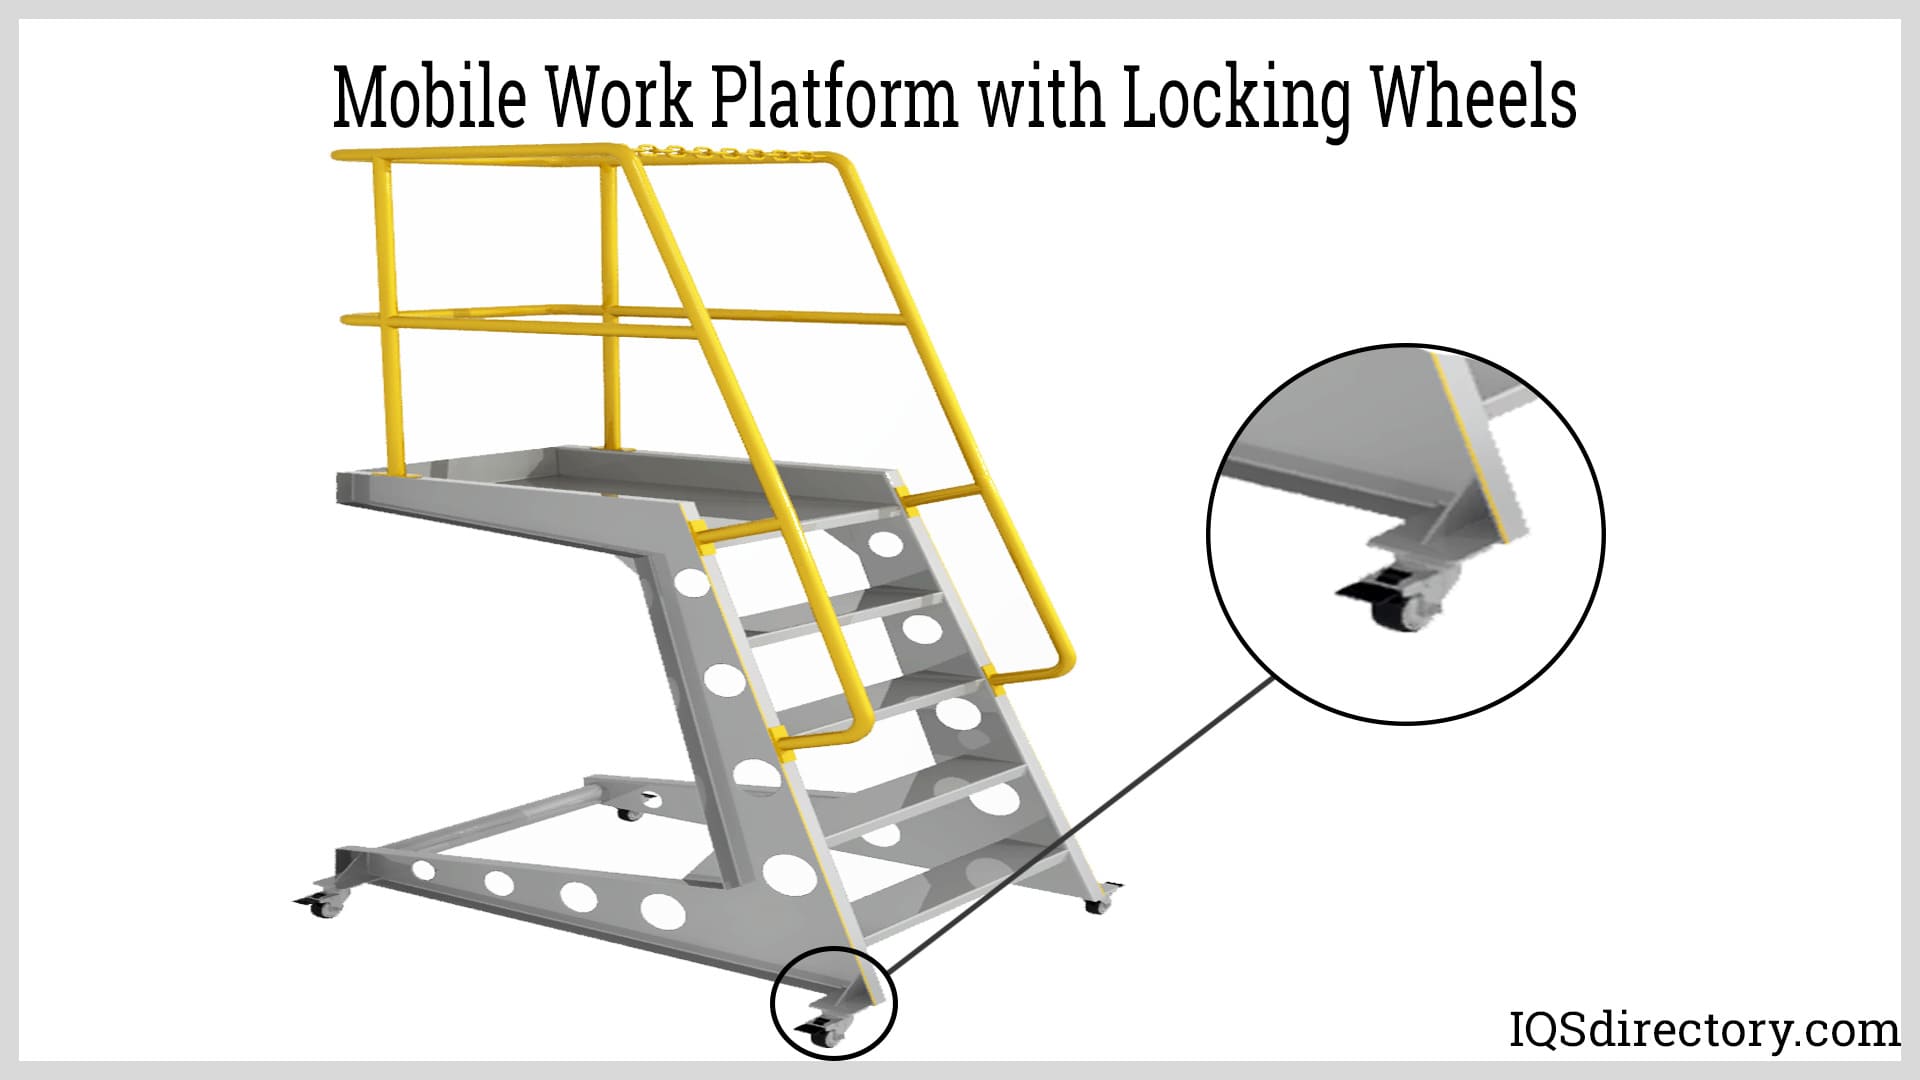 Mobile Work Platform with Locking Wheels